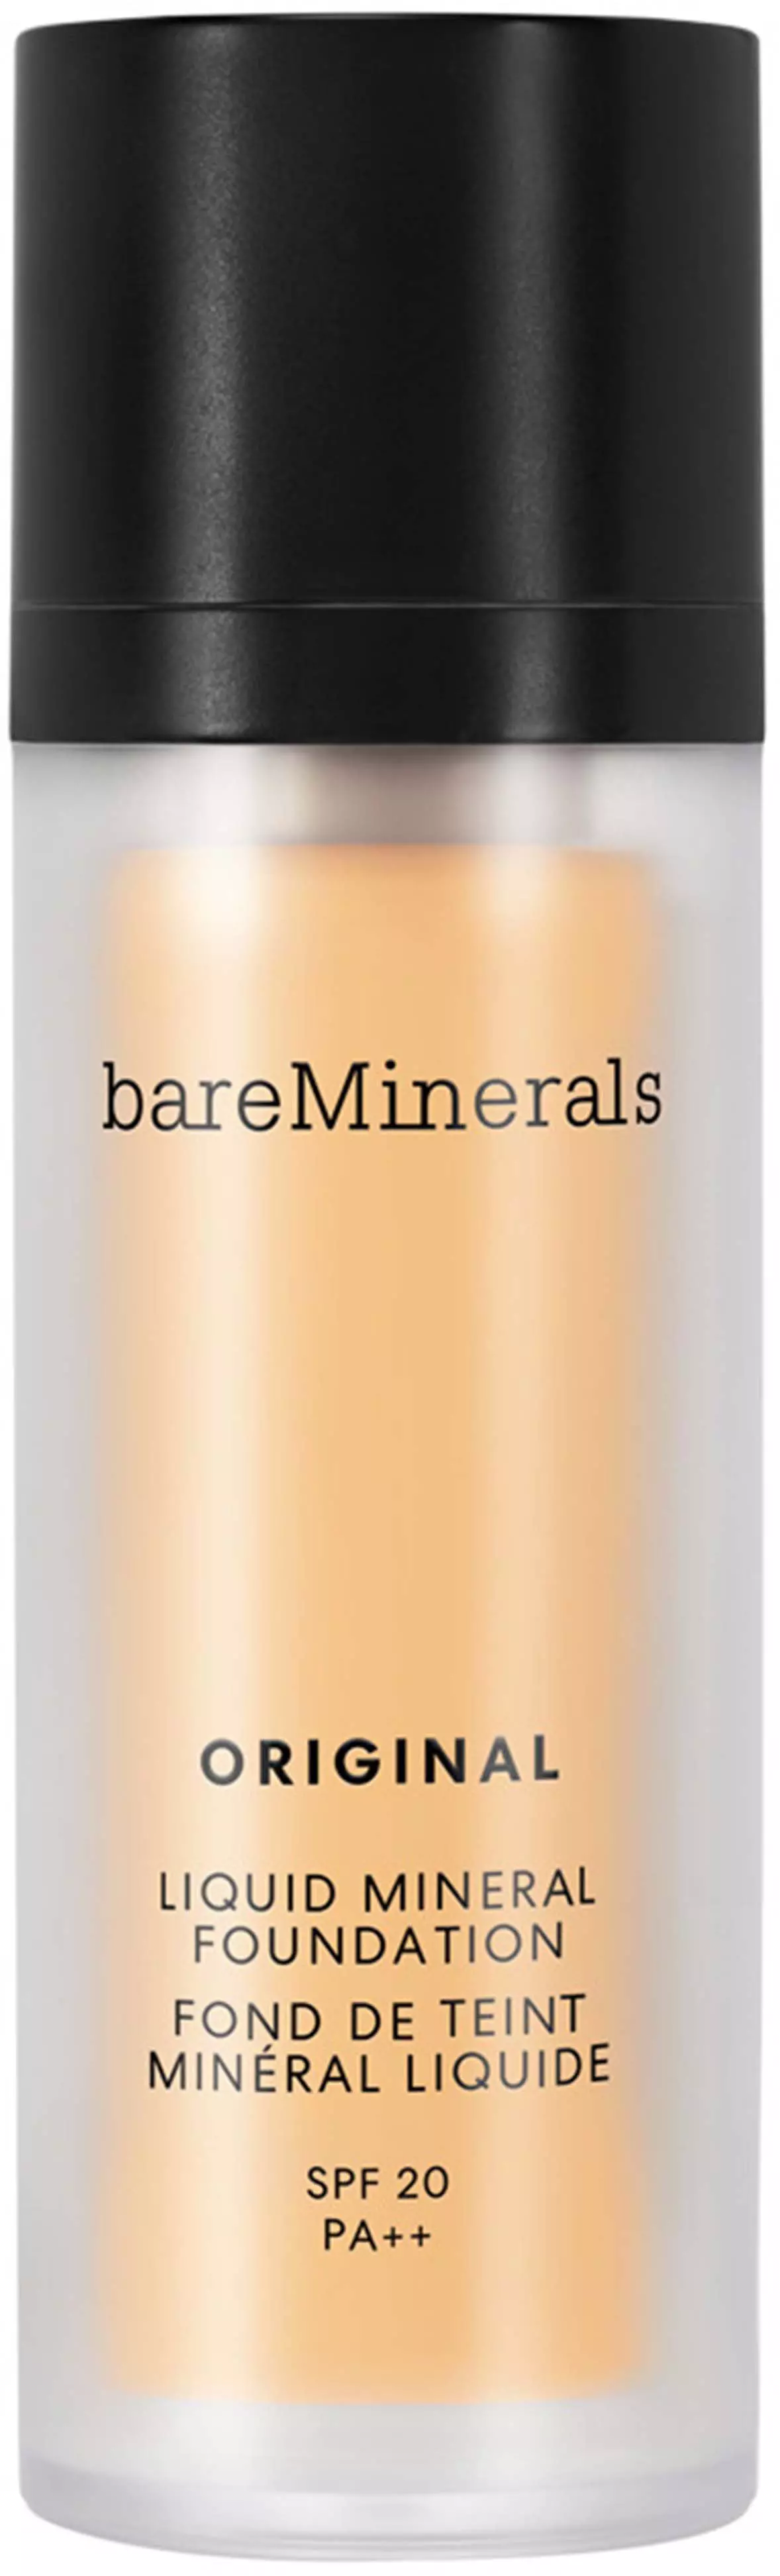 Bareminerals Original Liquid Mineral Foundation Spf